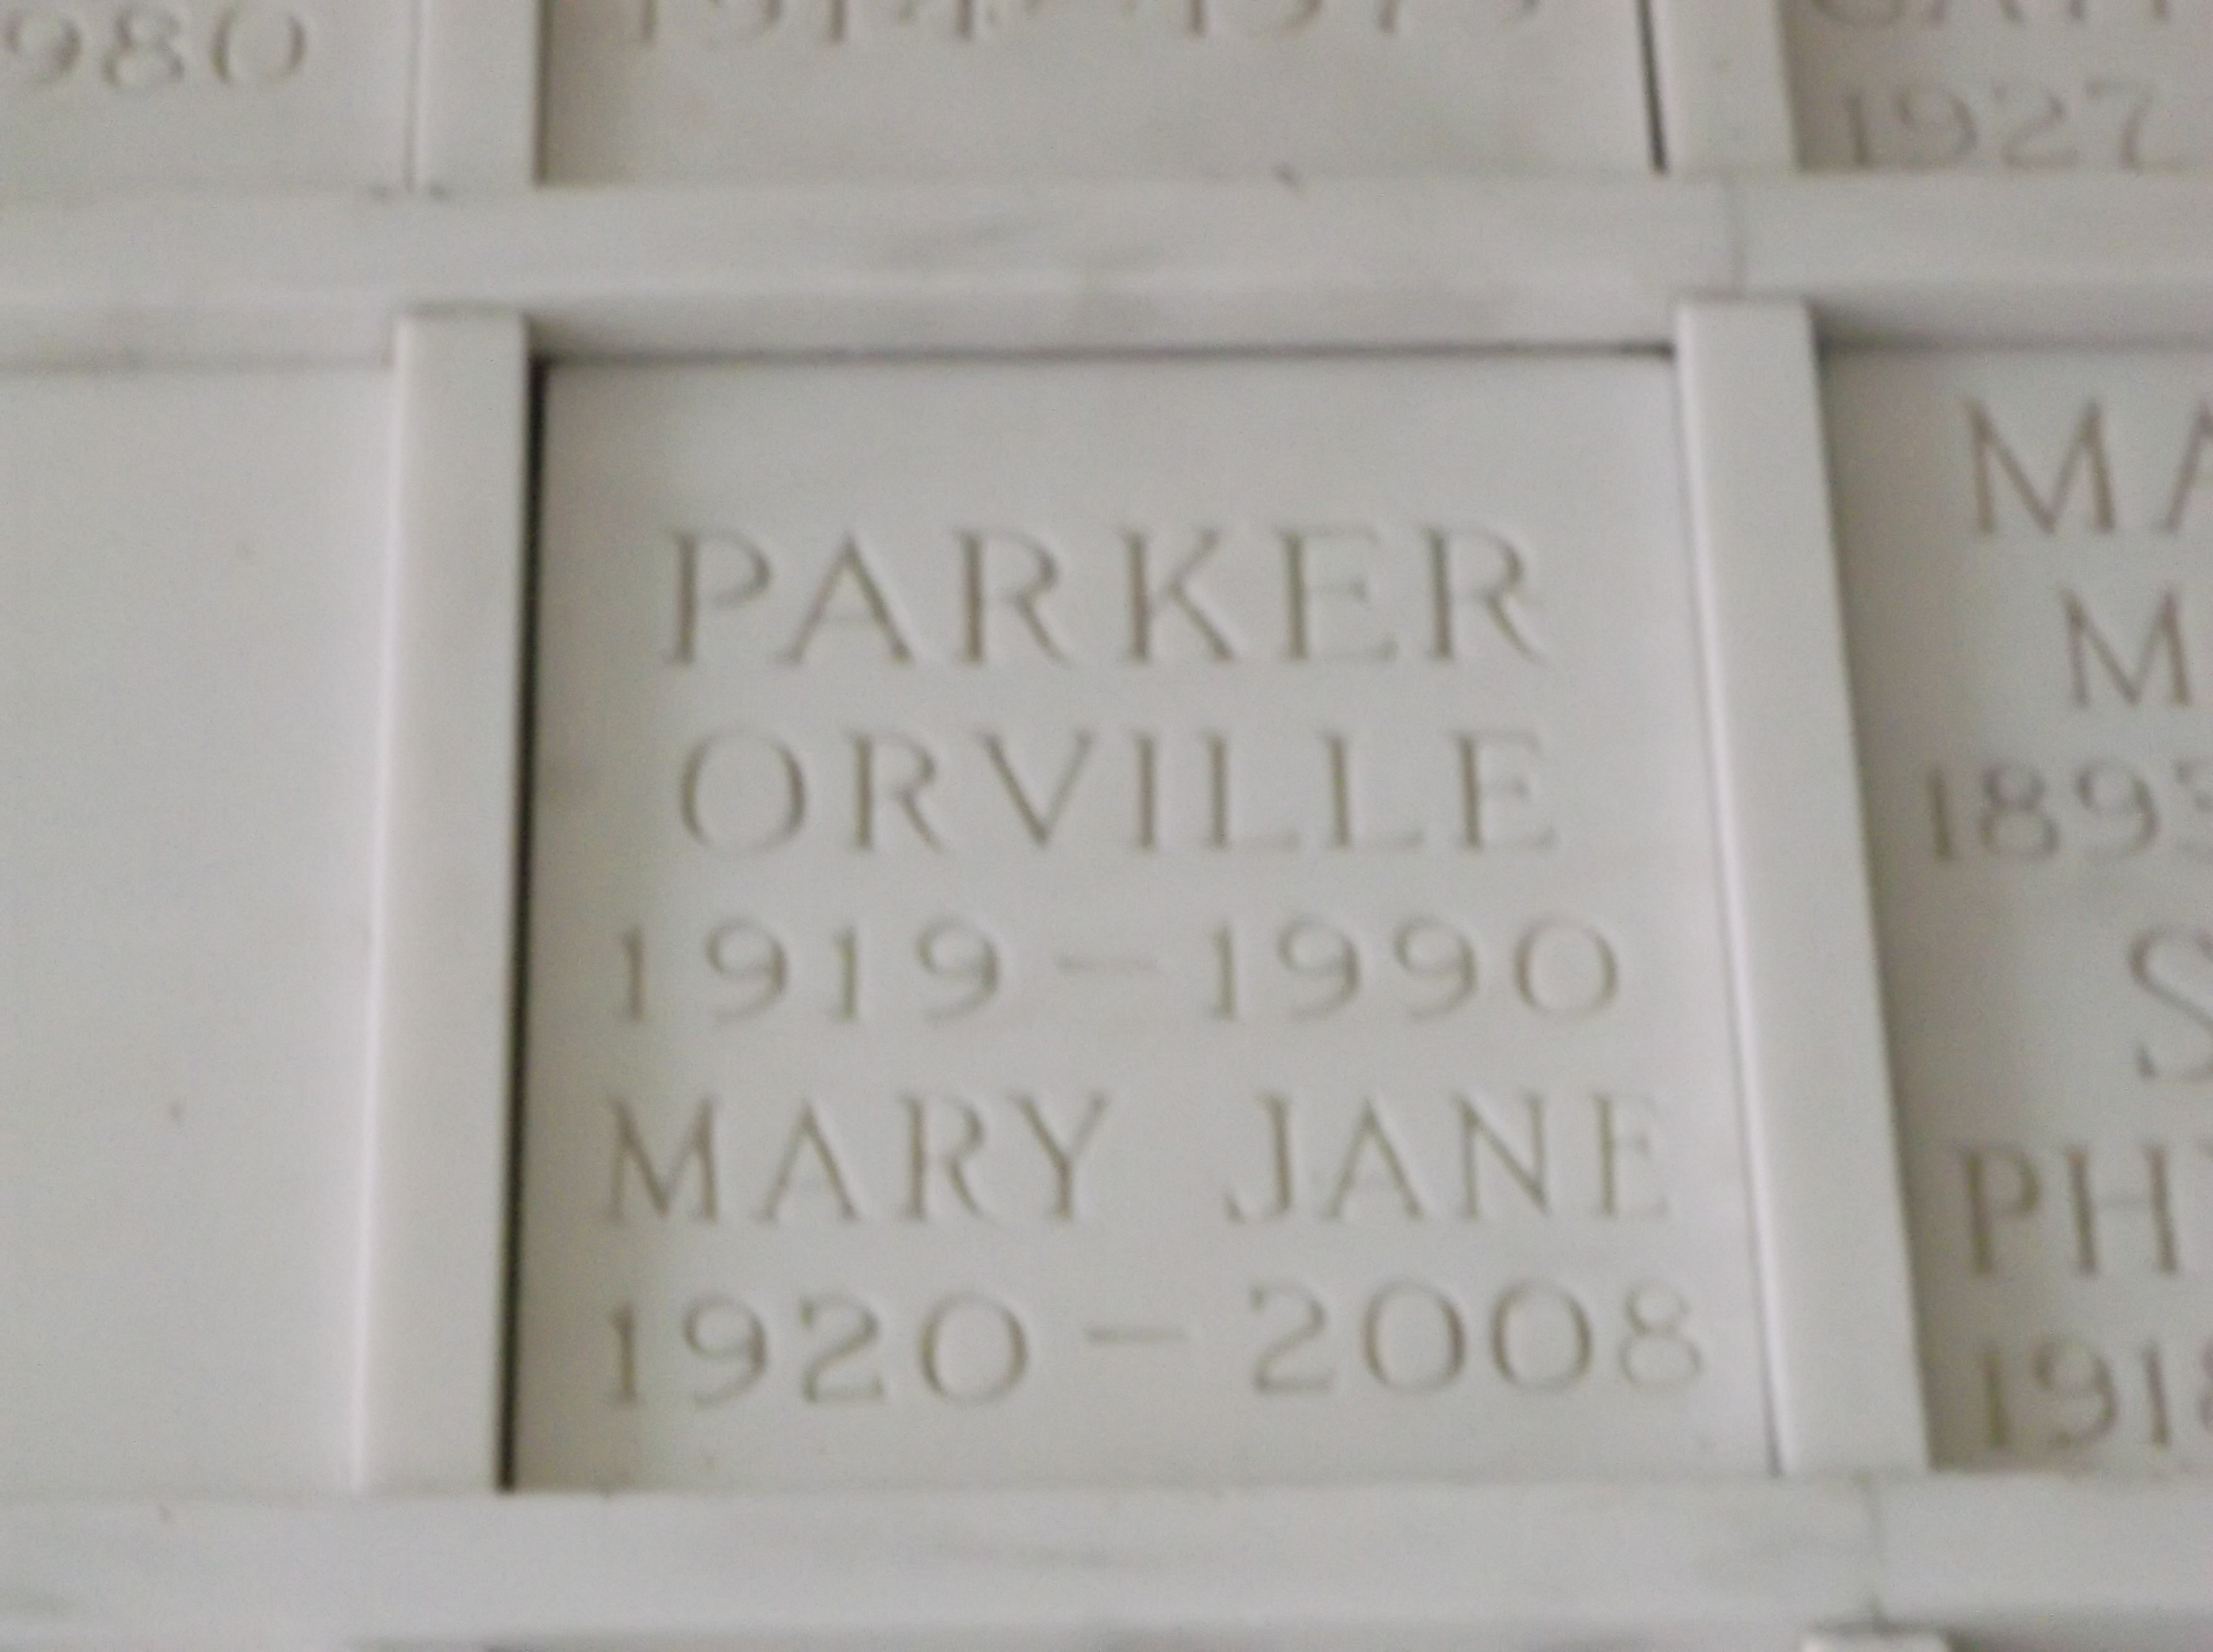 Mary Jane Parker